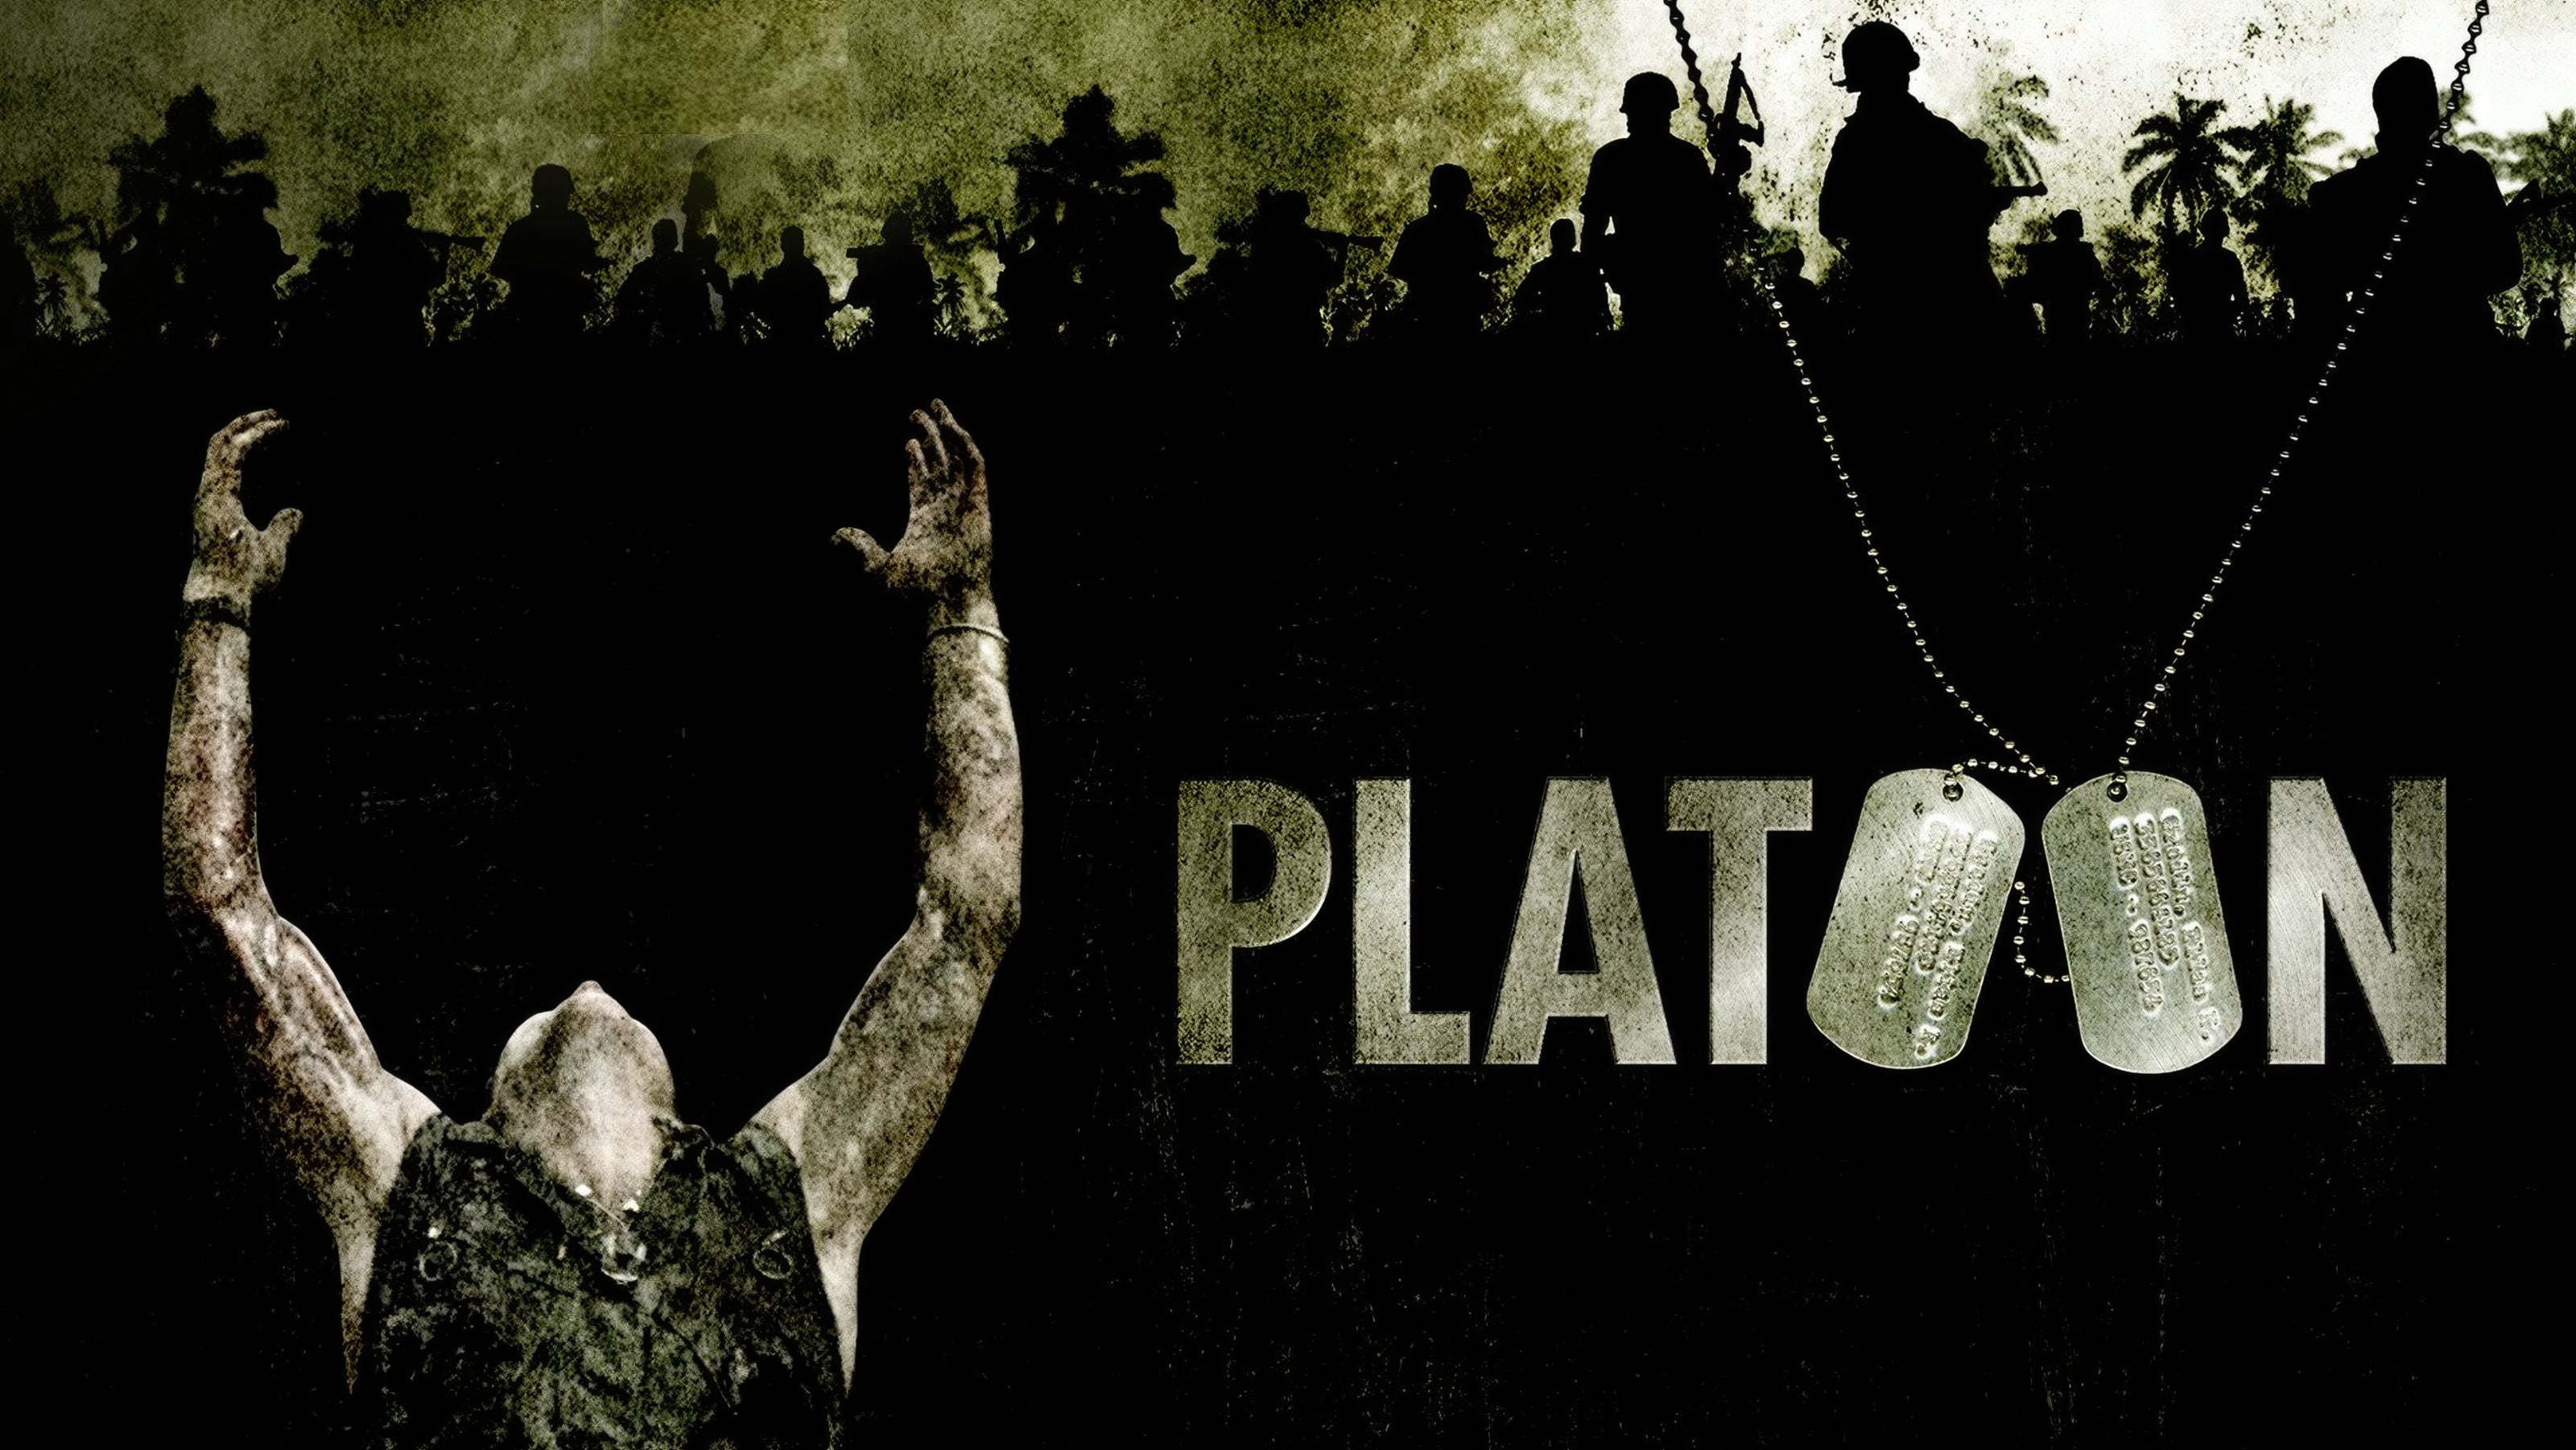 Platoon Script Screenplay - Image of Movie Film Poster